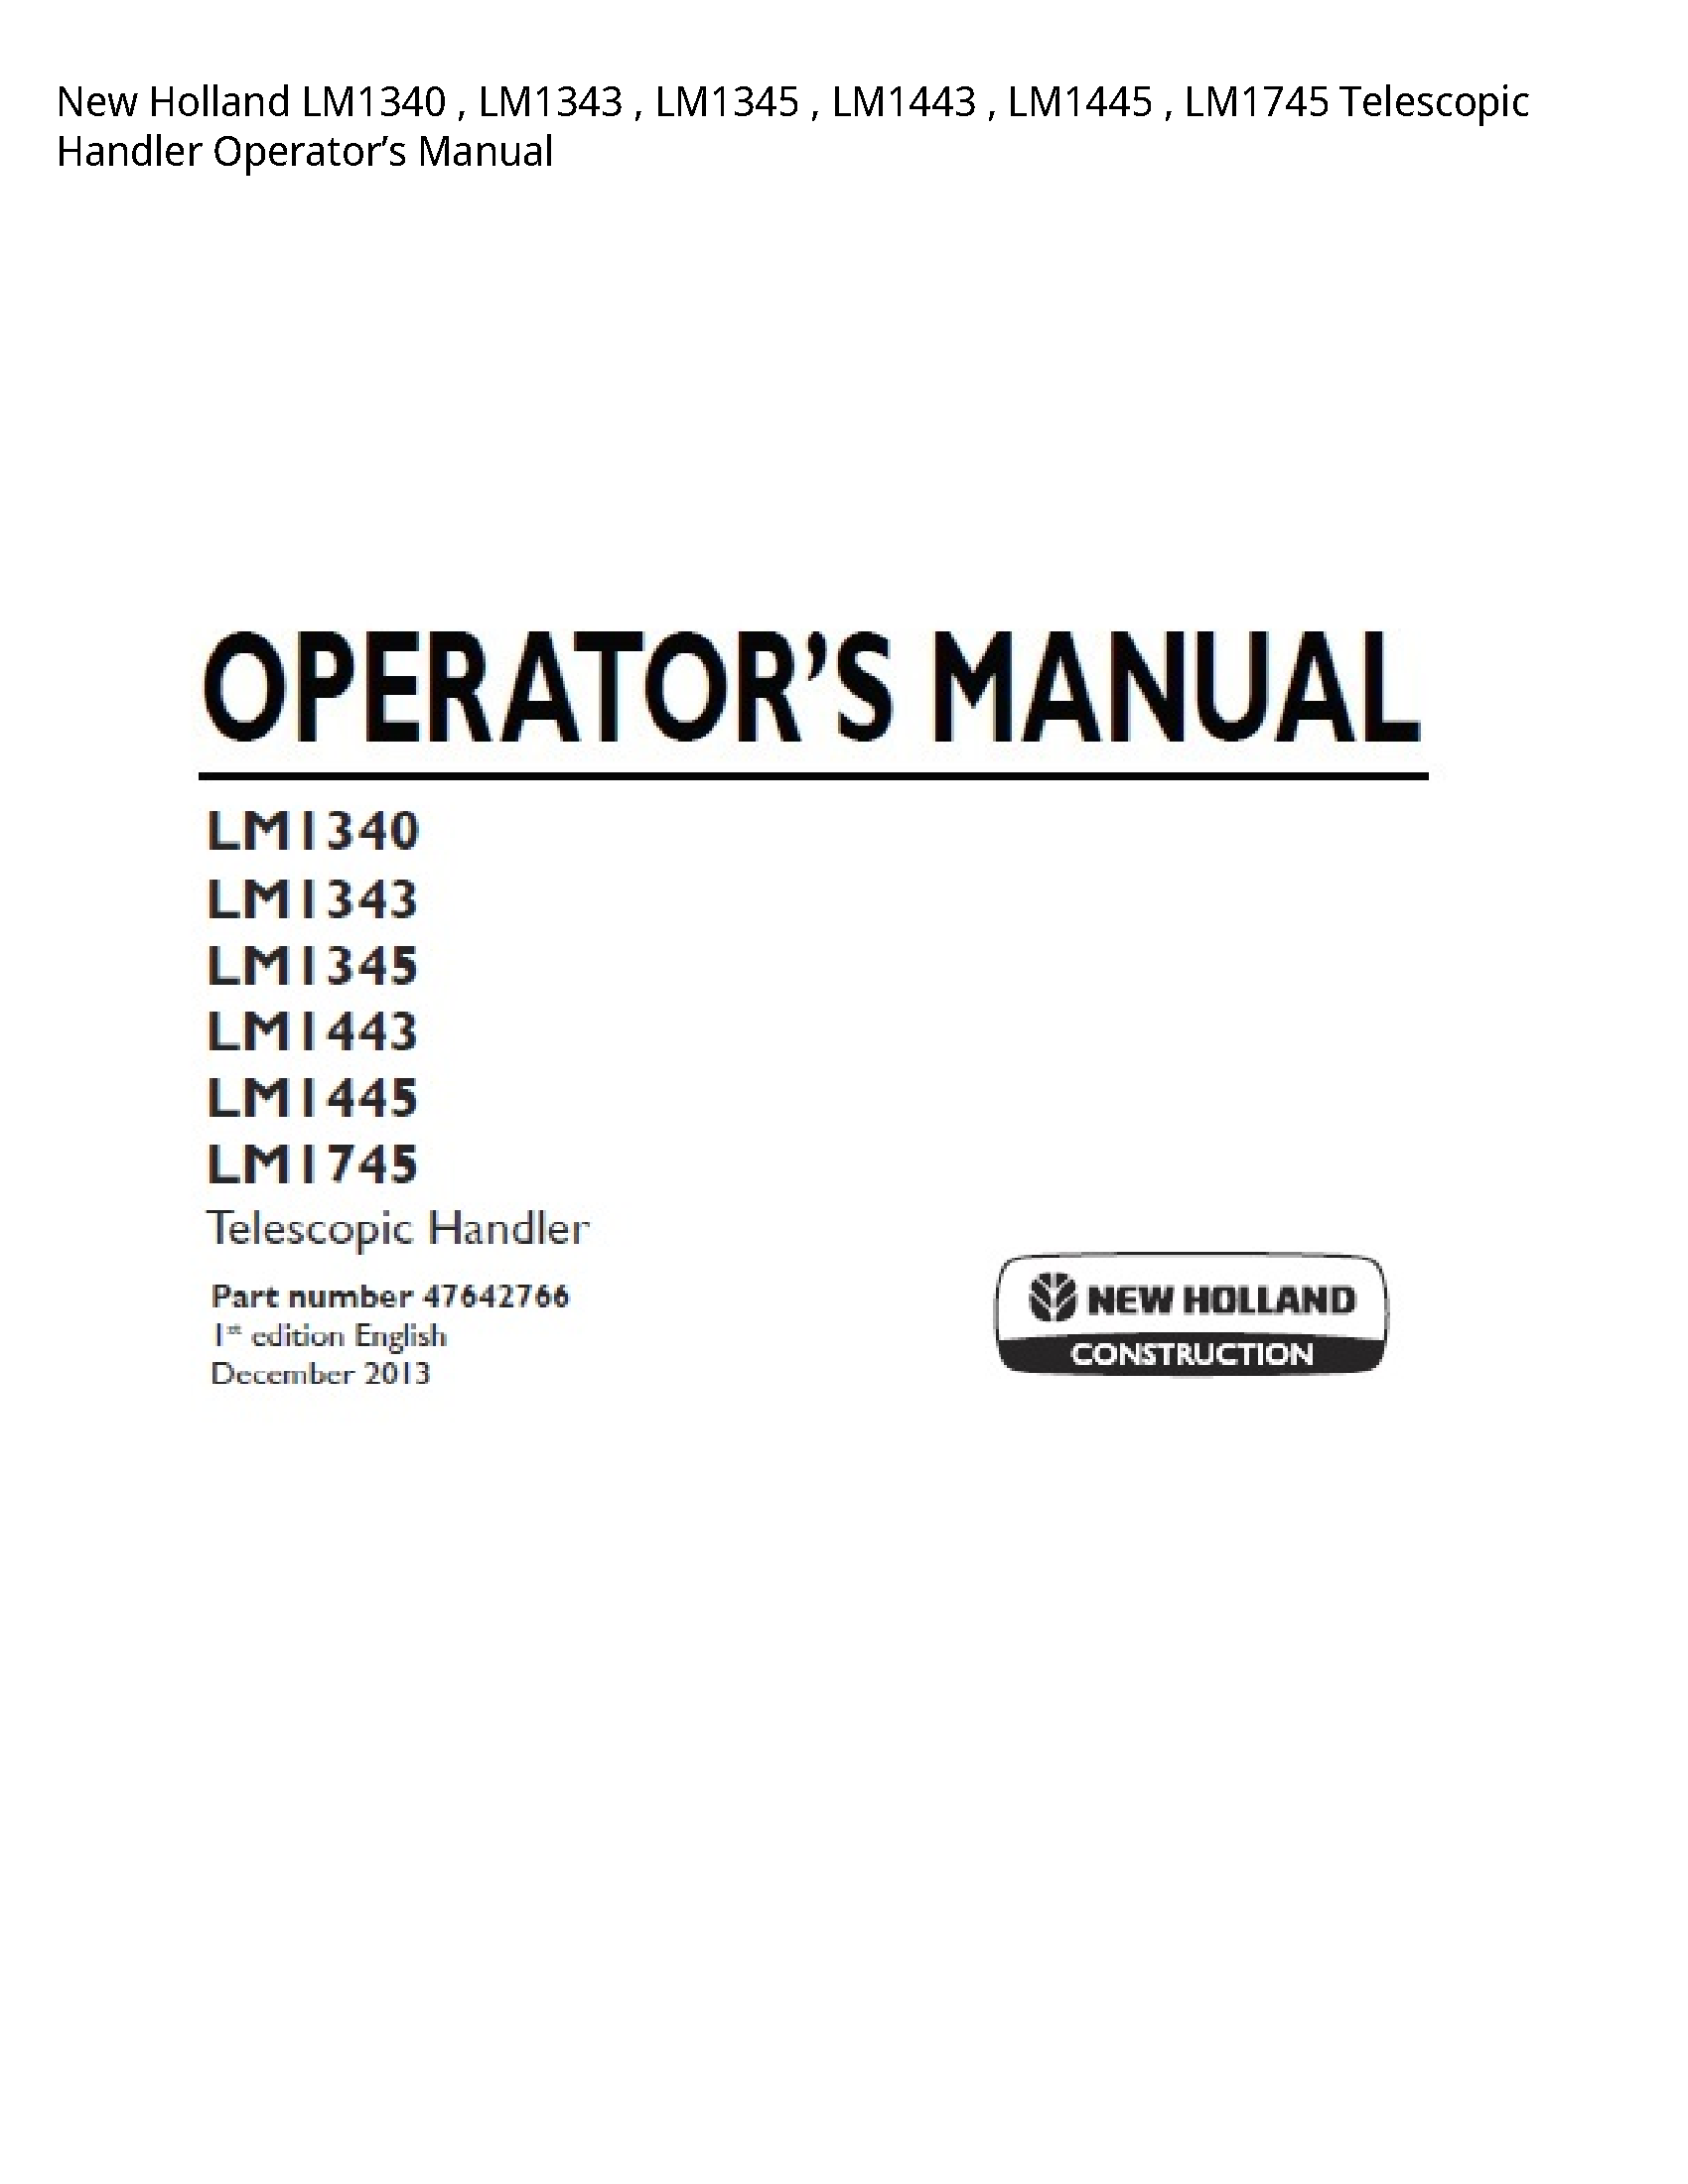 New Holland LM1340 Telescopic Handler Operator’s manual